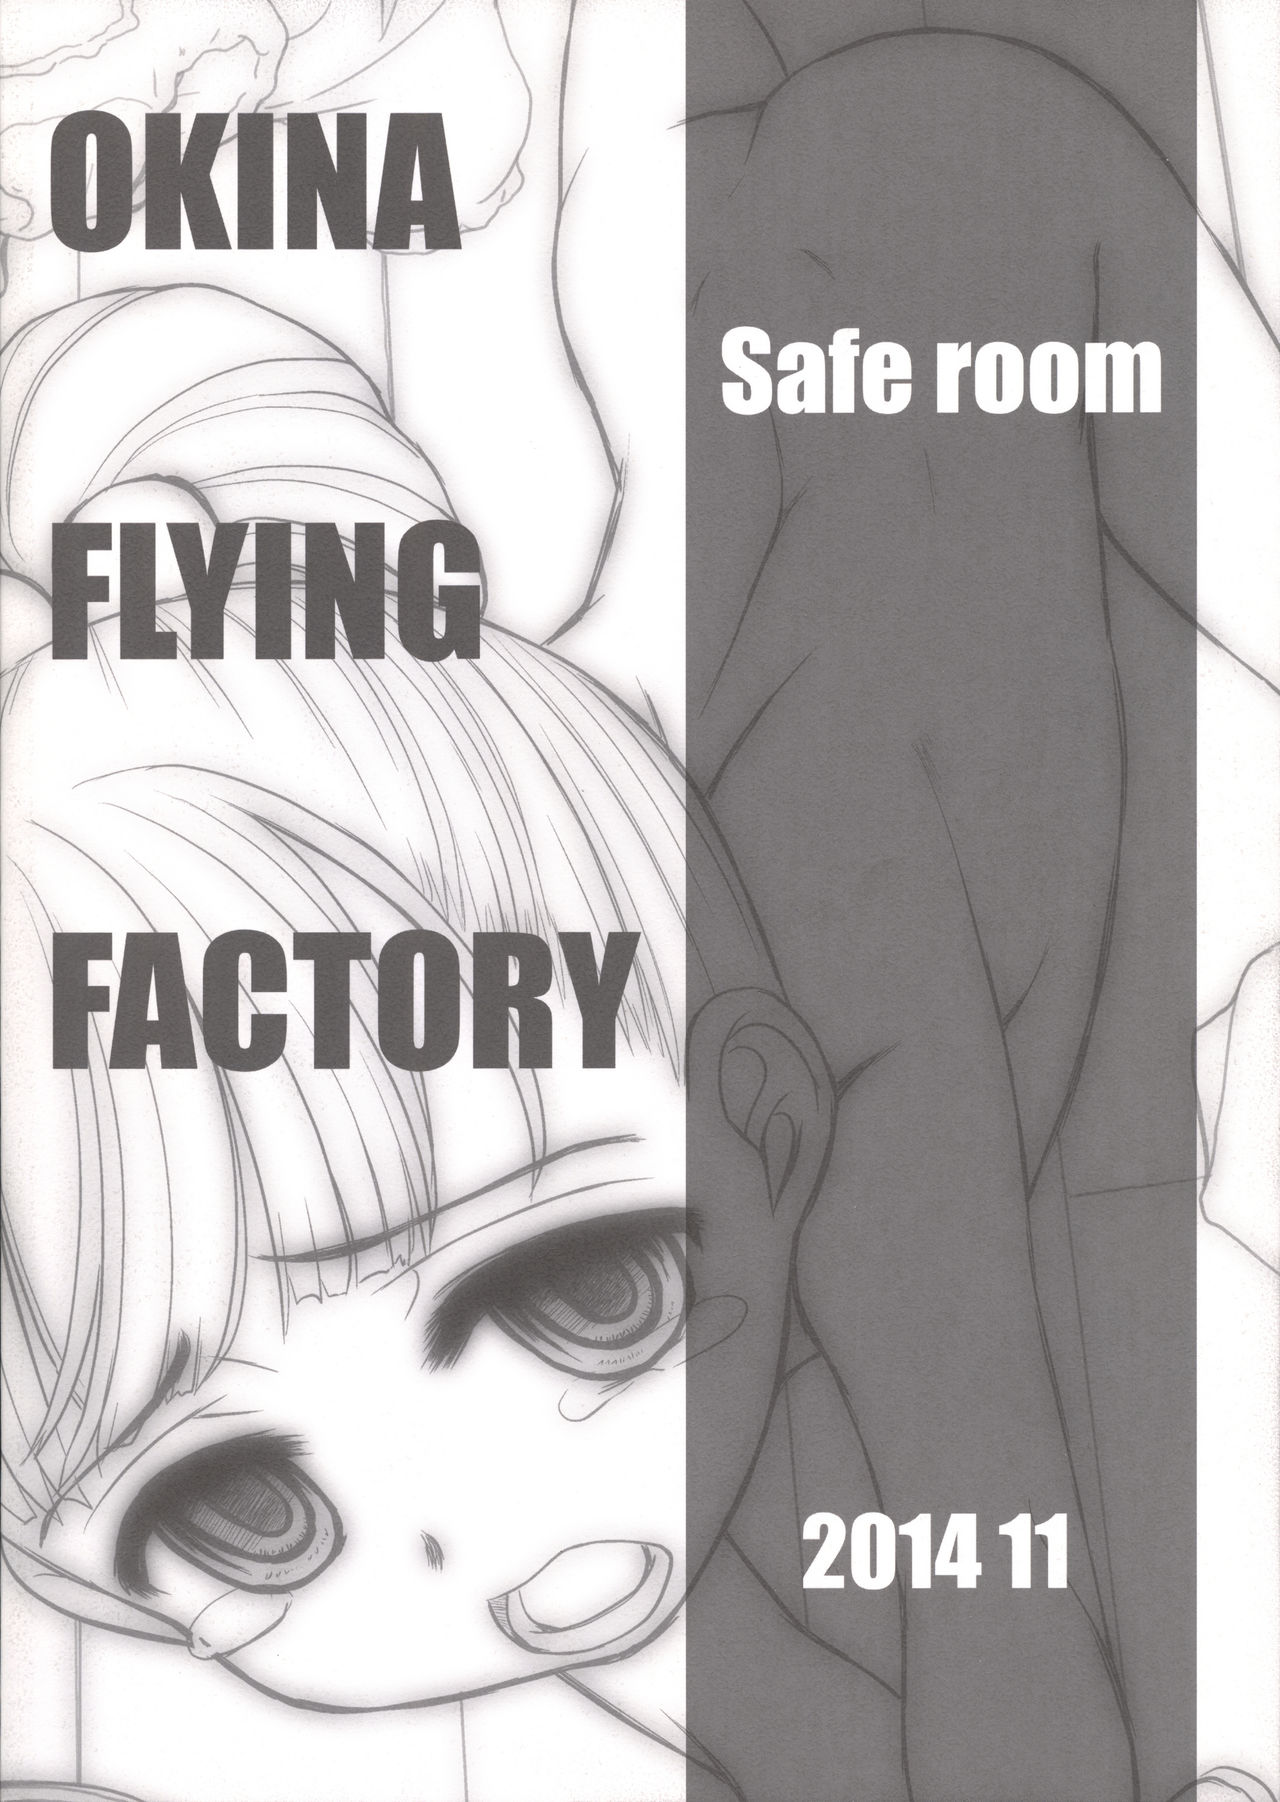 [Okina Flying Factory (OKINA)] SAFE ROOM